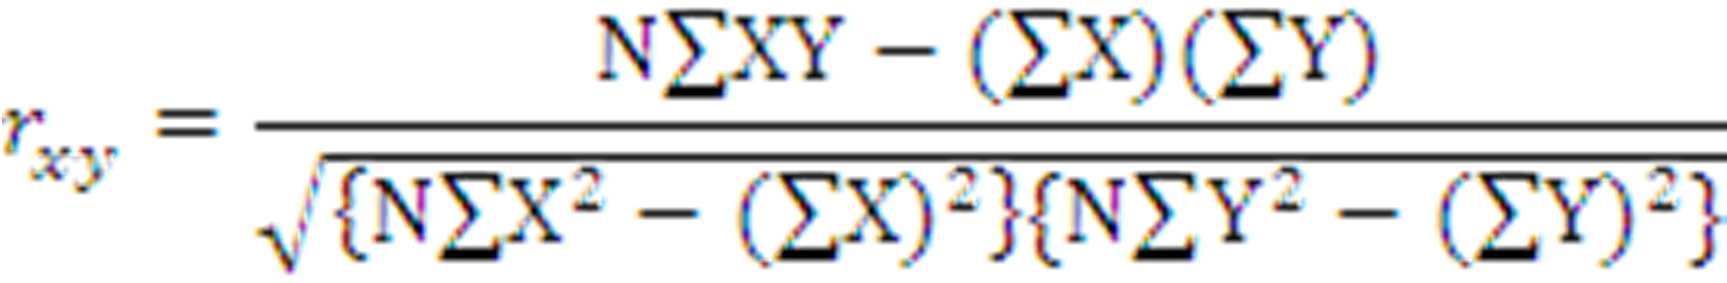 26 Keterangan : a. r xy = koefisien korelasi antara variabel X dan variabel Y b. N = Jumlah siswa c. X = Jumlah skor benar pada item n d. Y = Jumlah skor total e.